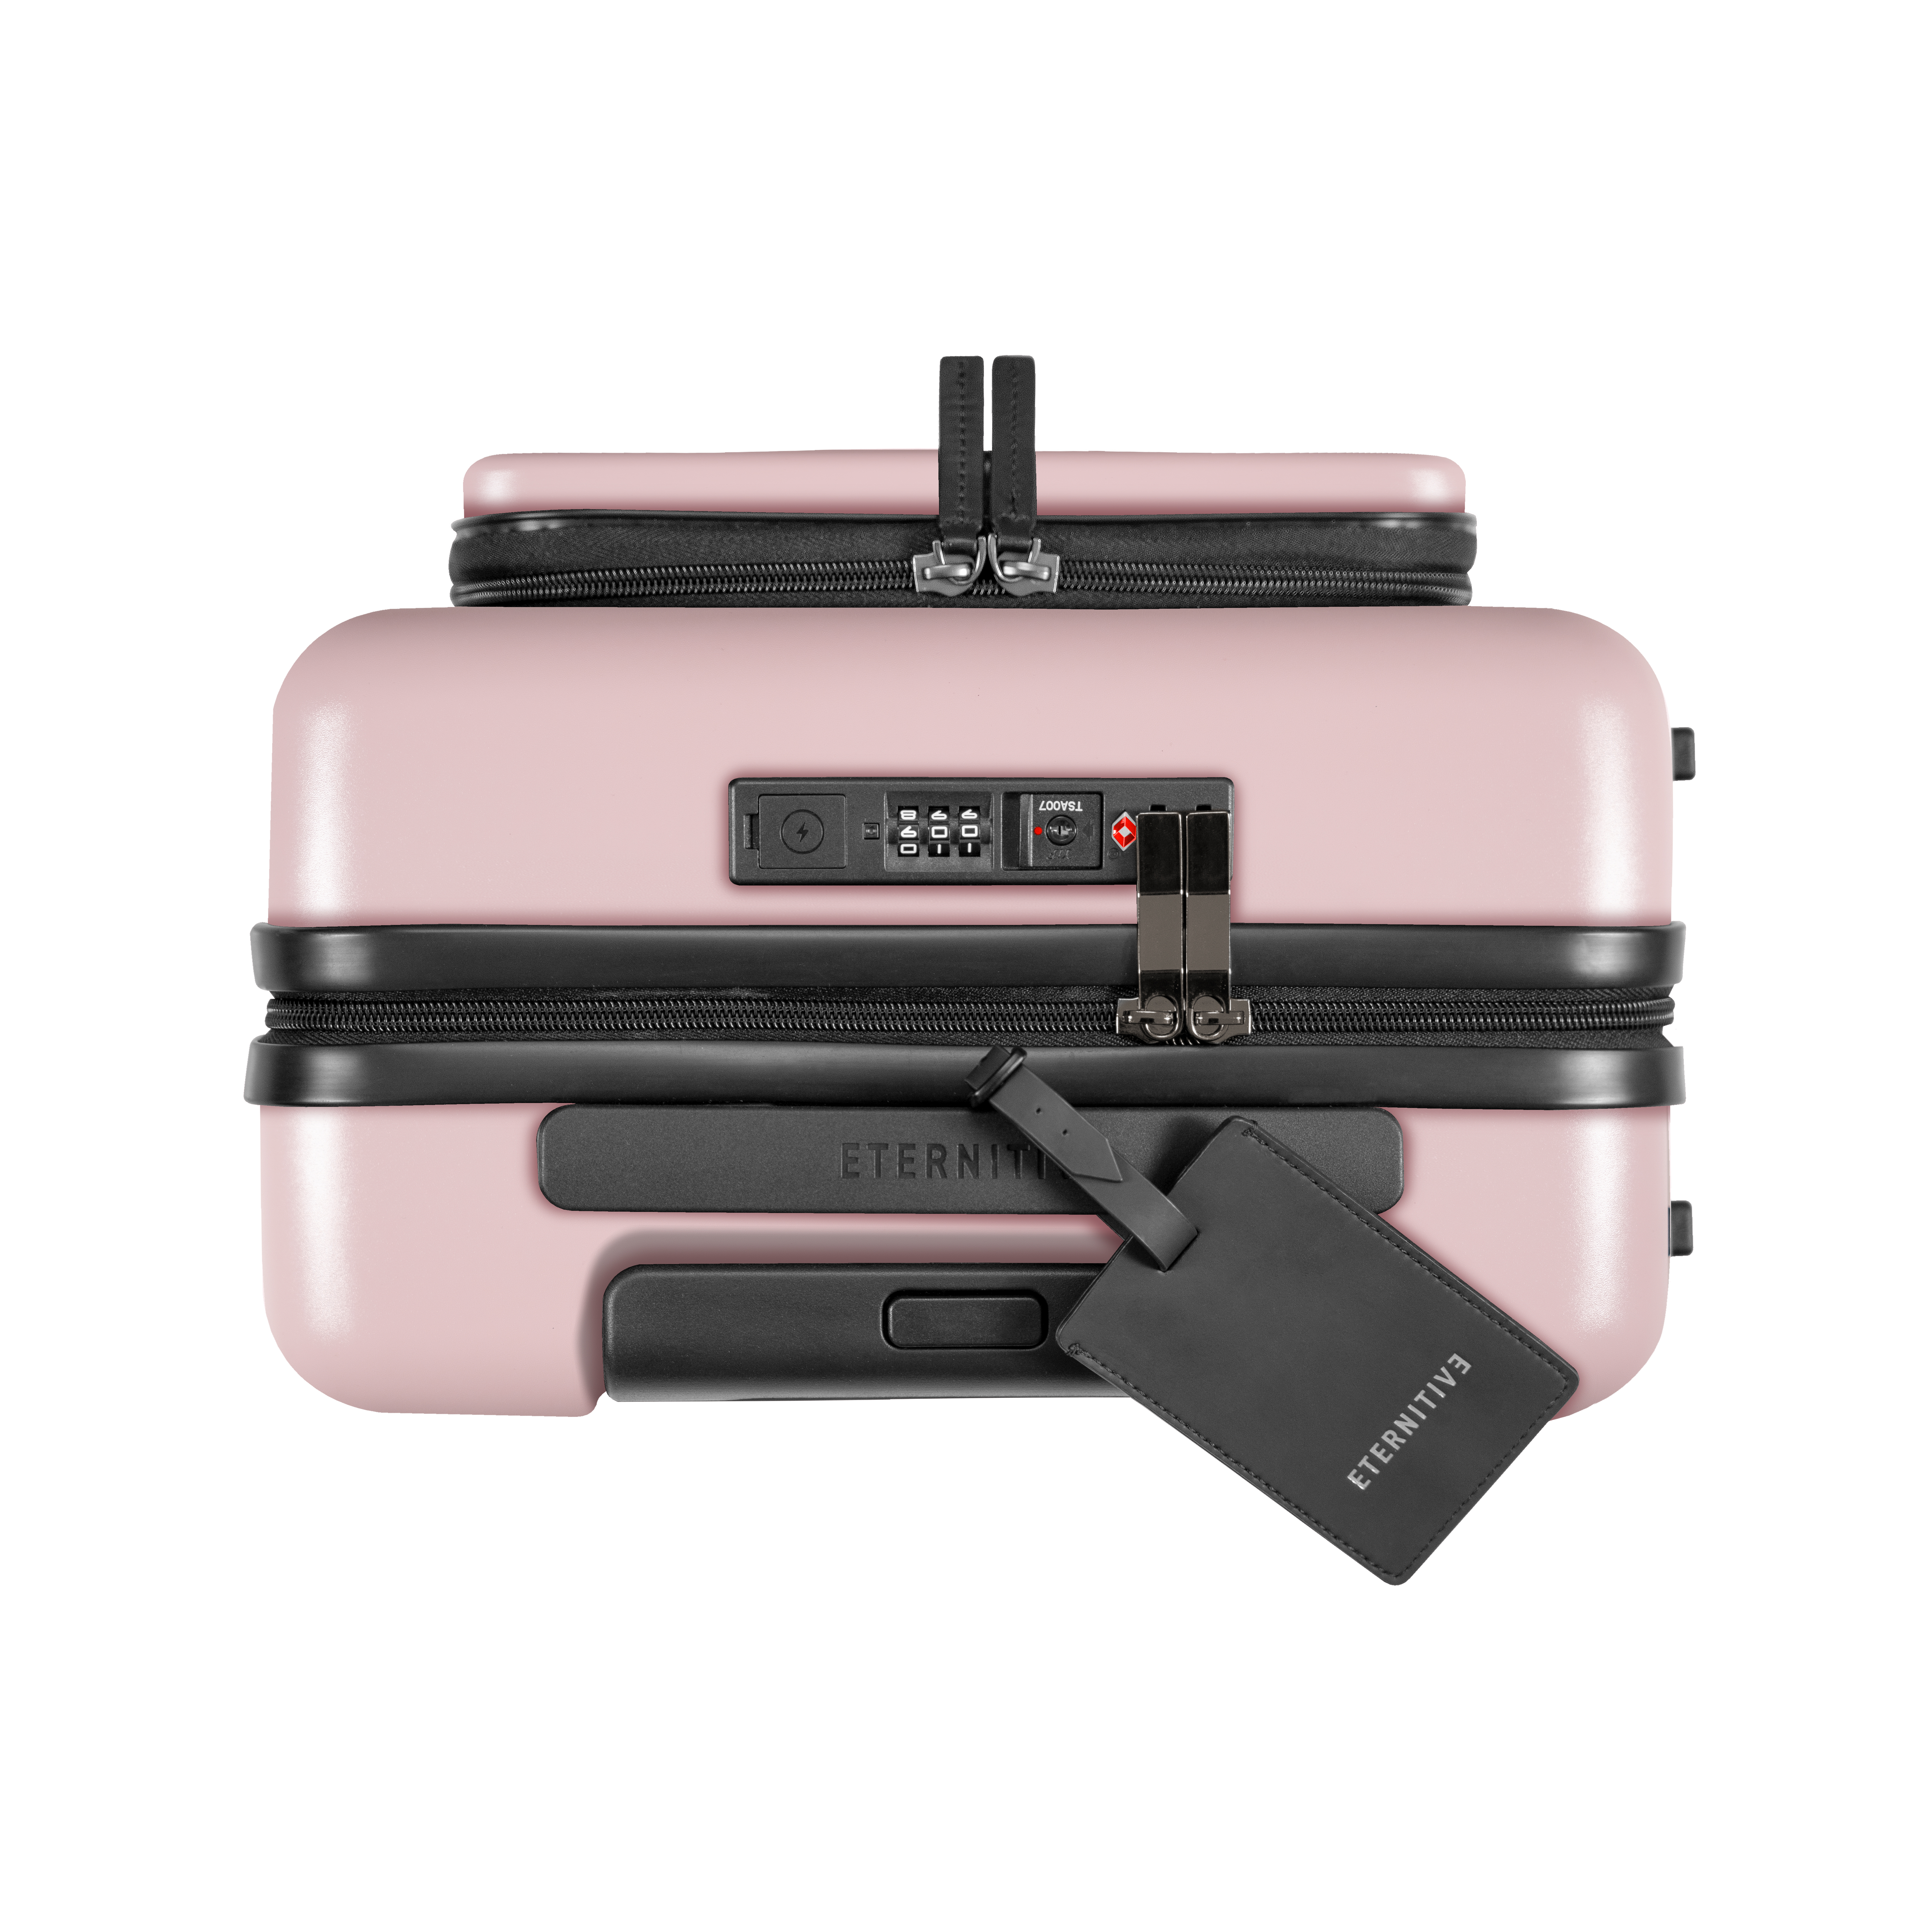 E3 Koffer set 2 teilig: \n Handgepäck plus + Großer Koffer Pink